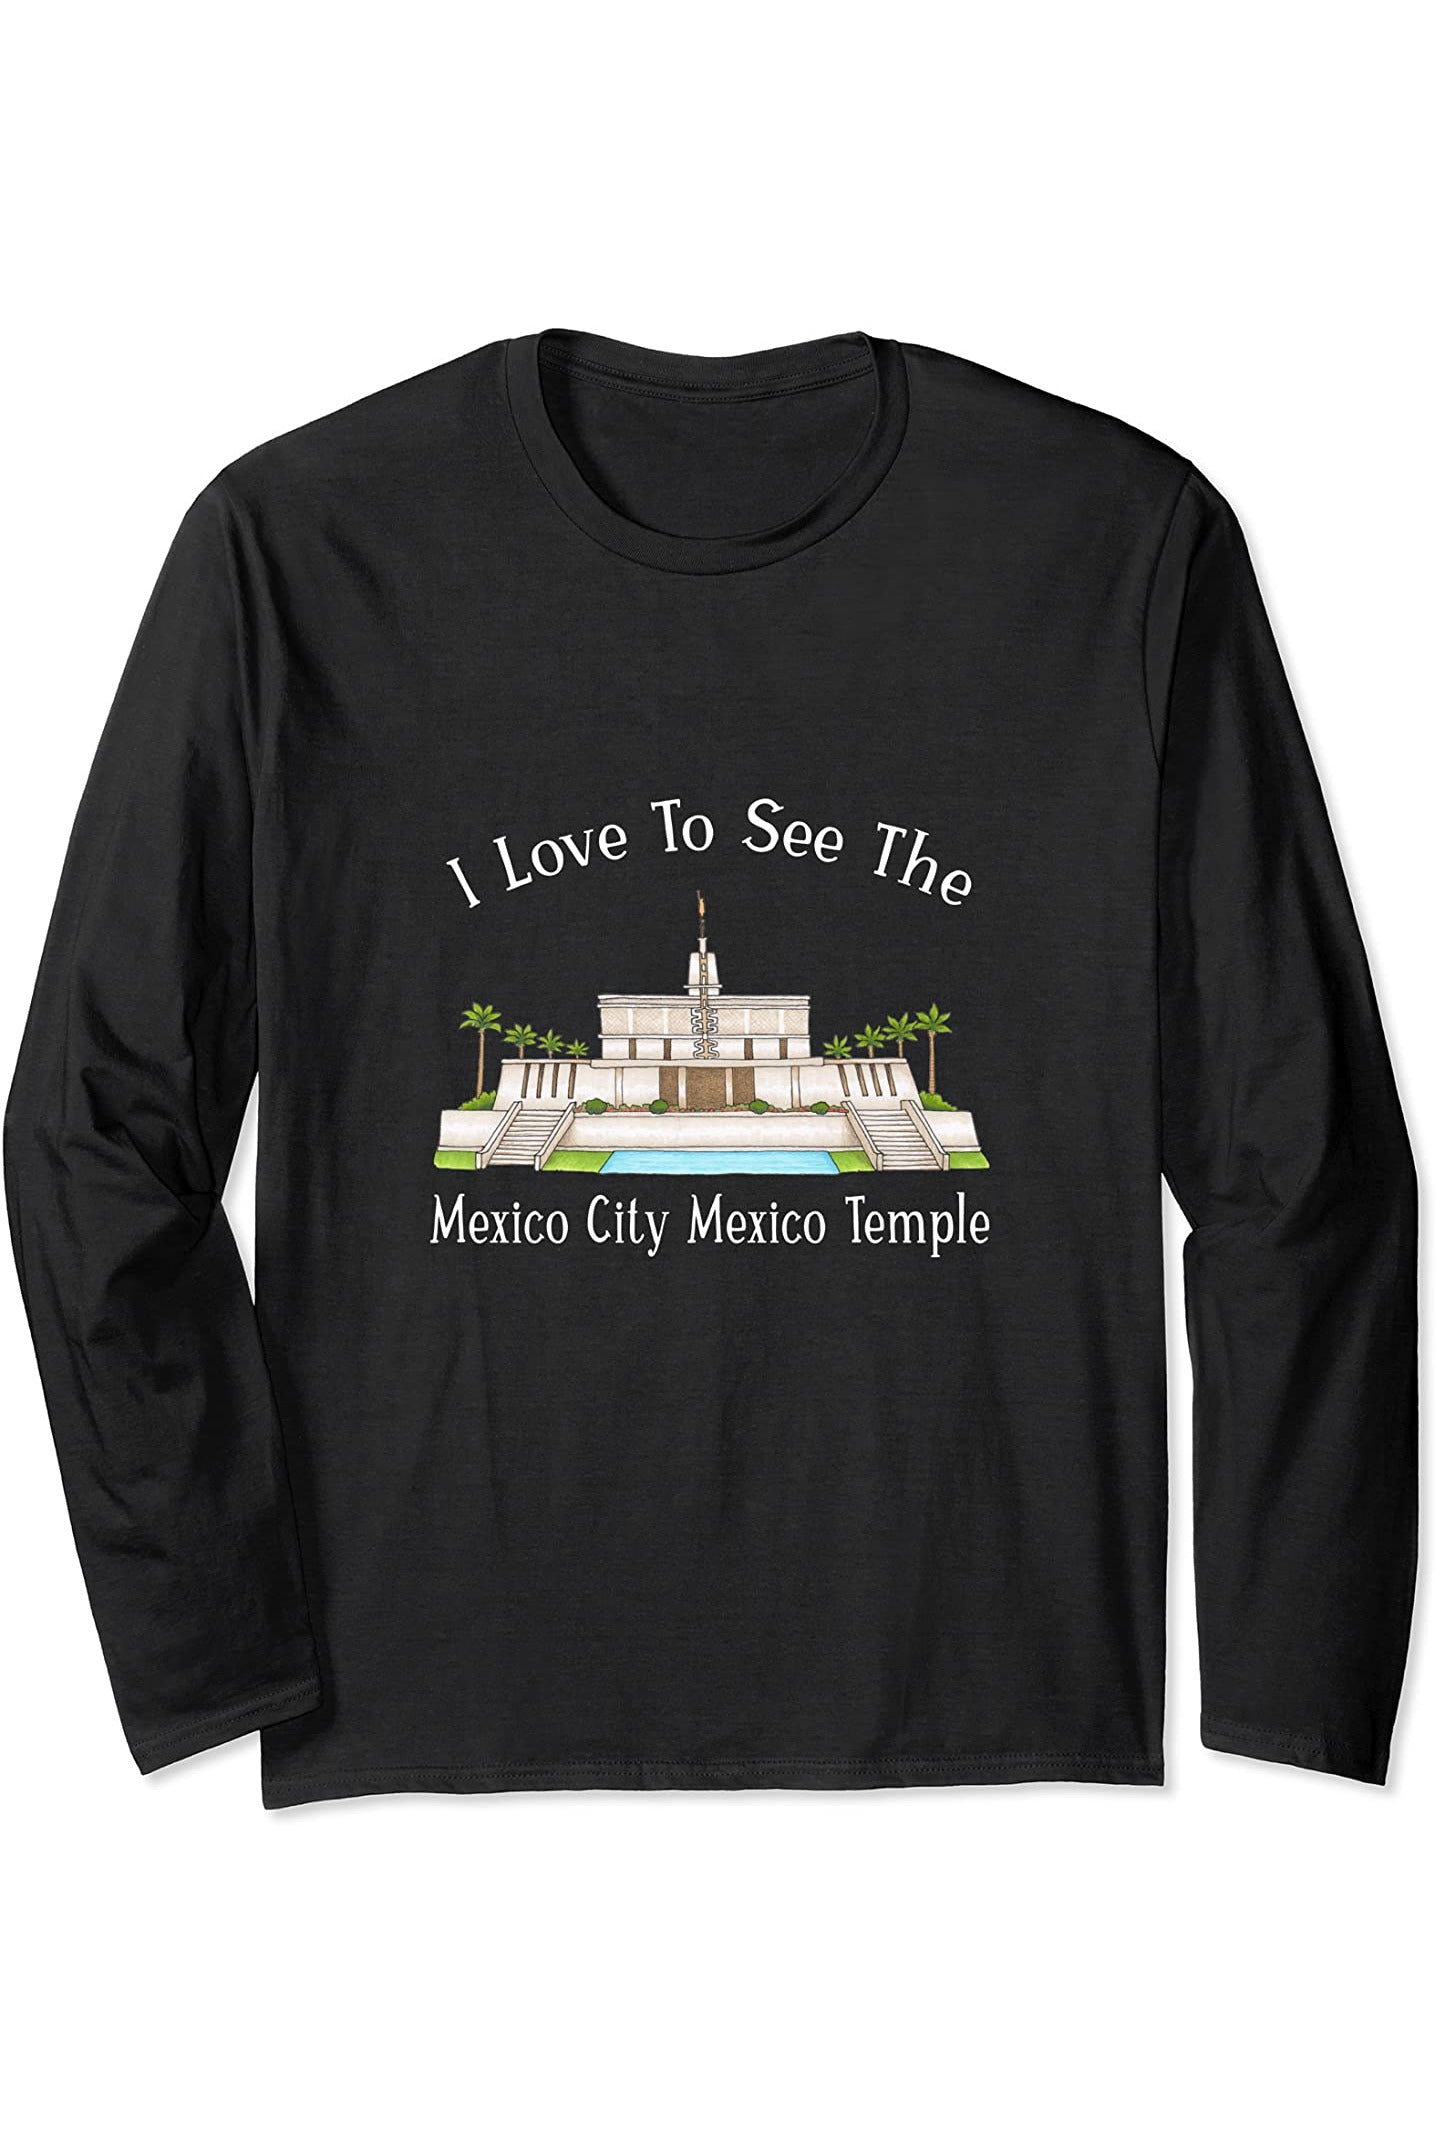 Mexico City Mexico Temple Long Sleeve T-Shirt - Happy Style (English) US